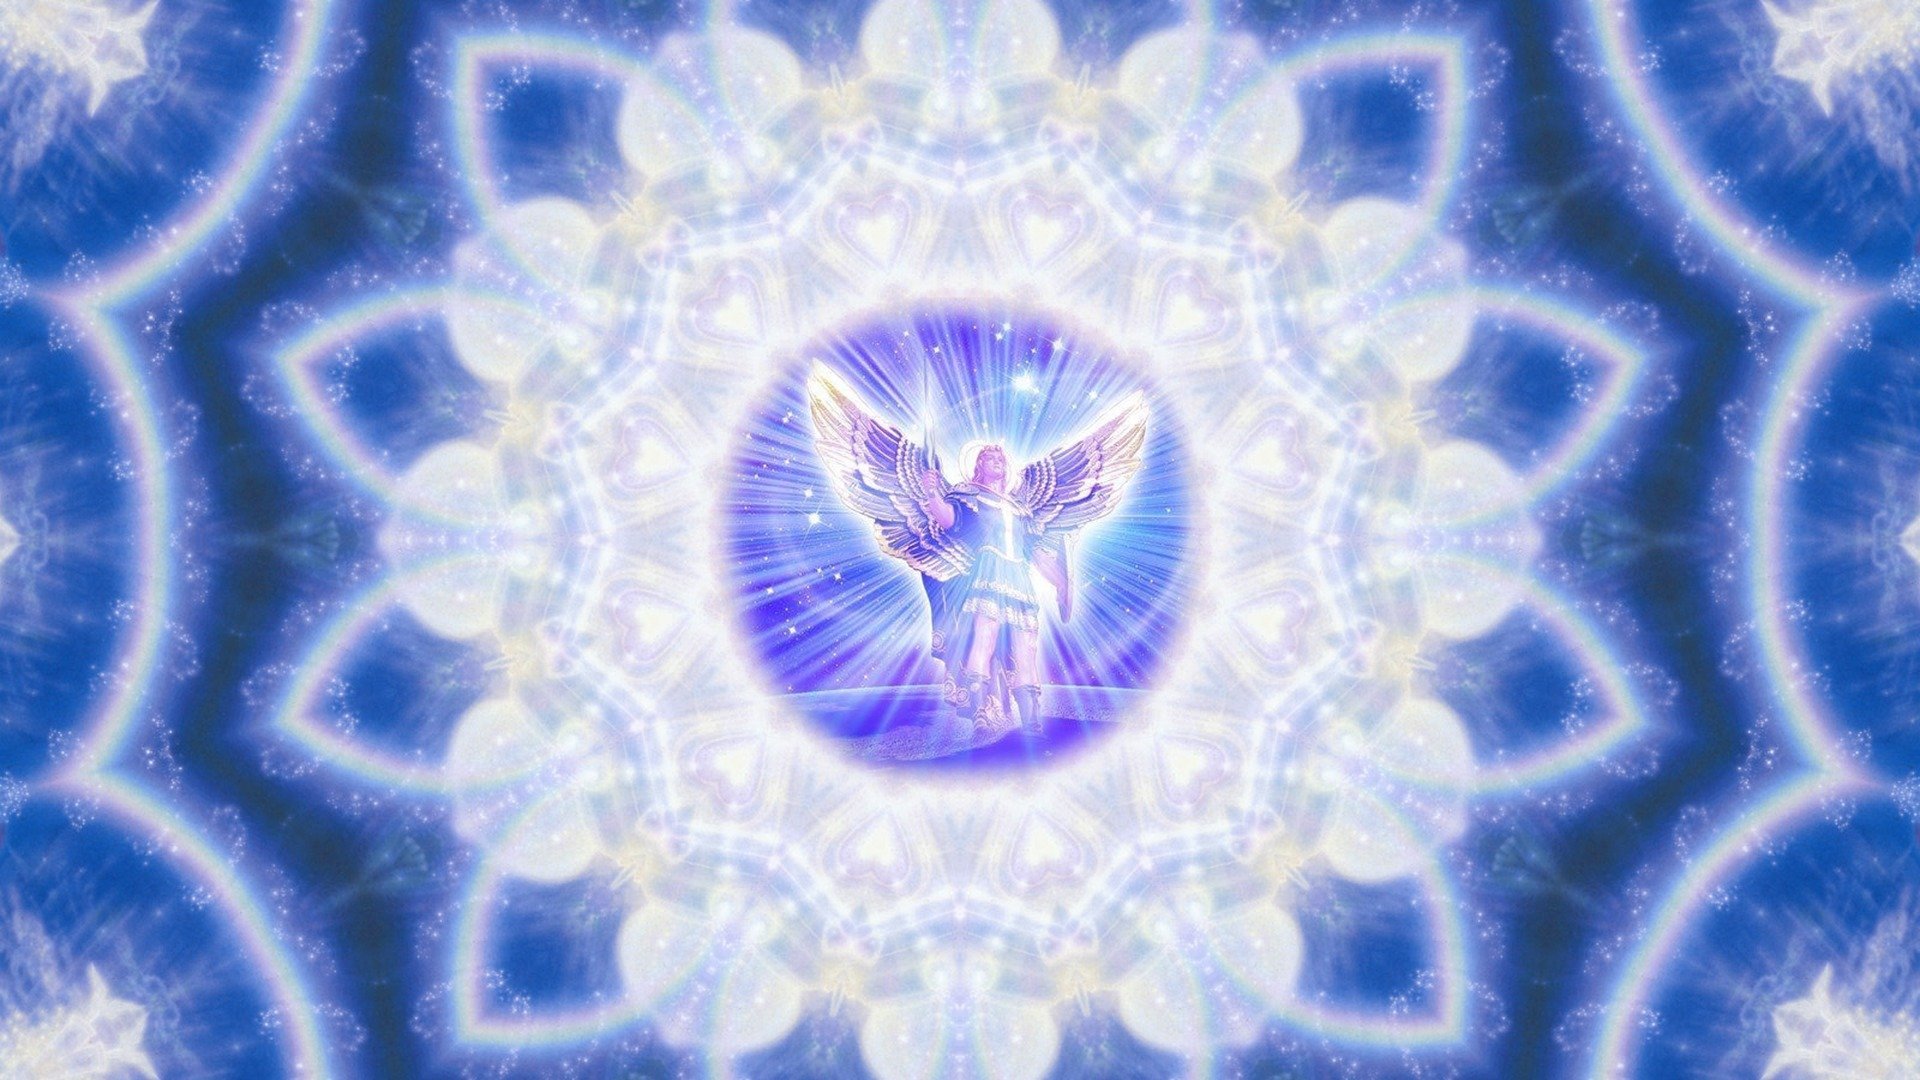 archangel michael archangel angel abstract mandala heart